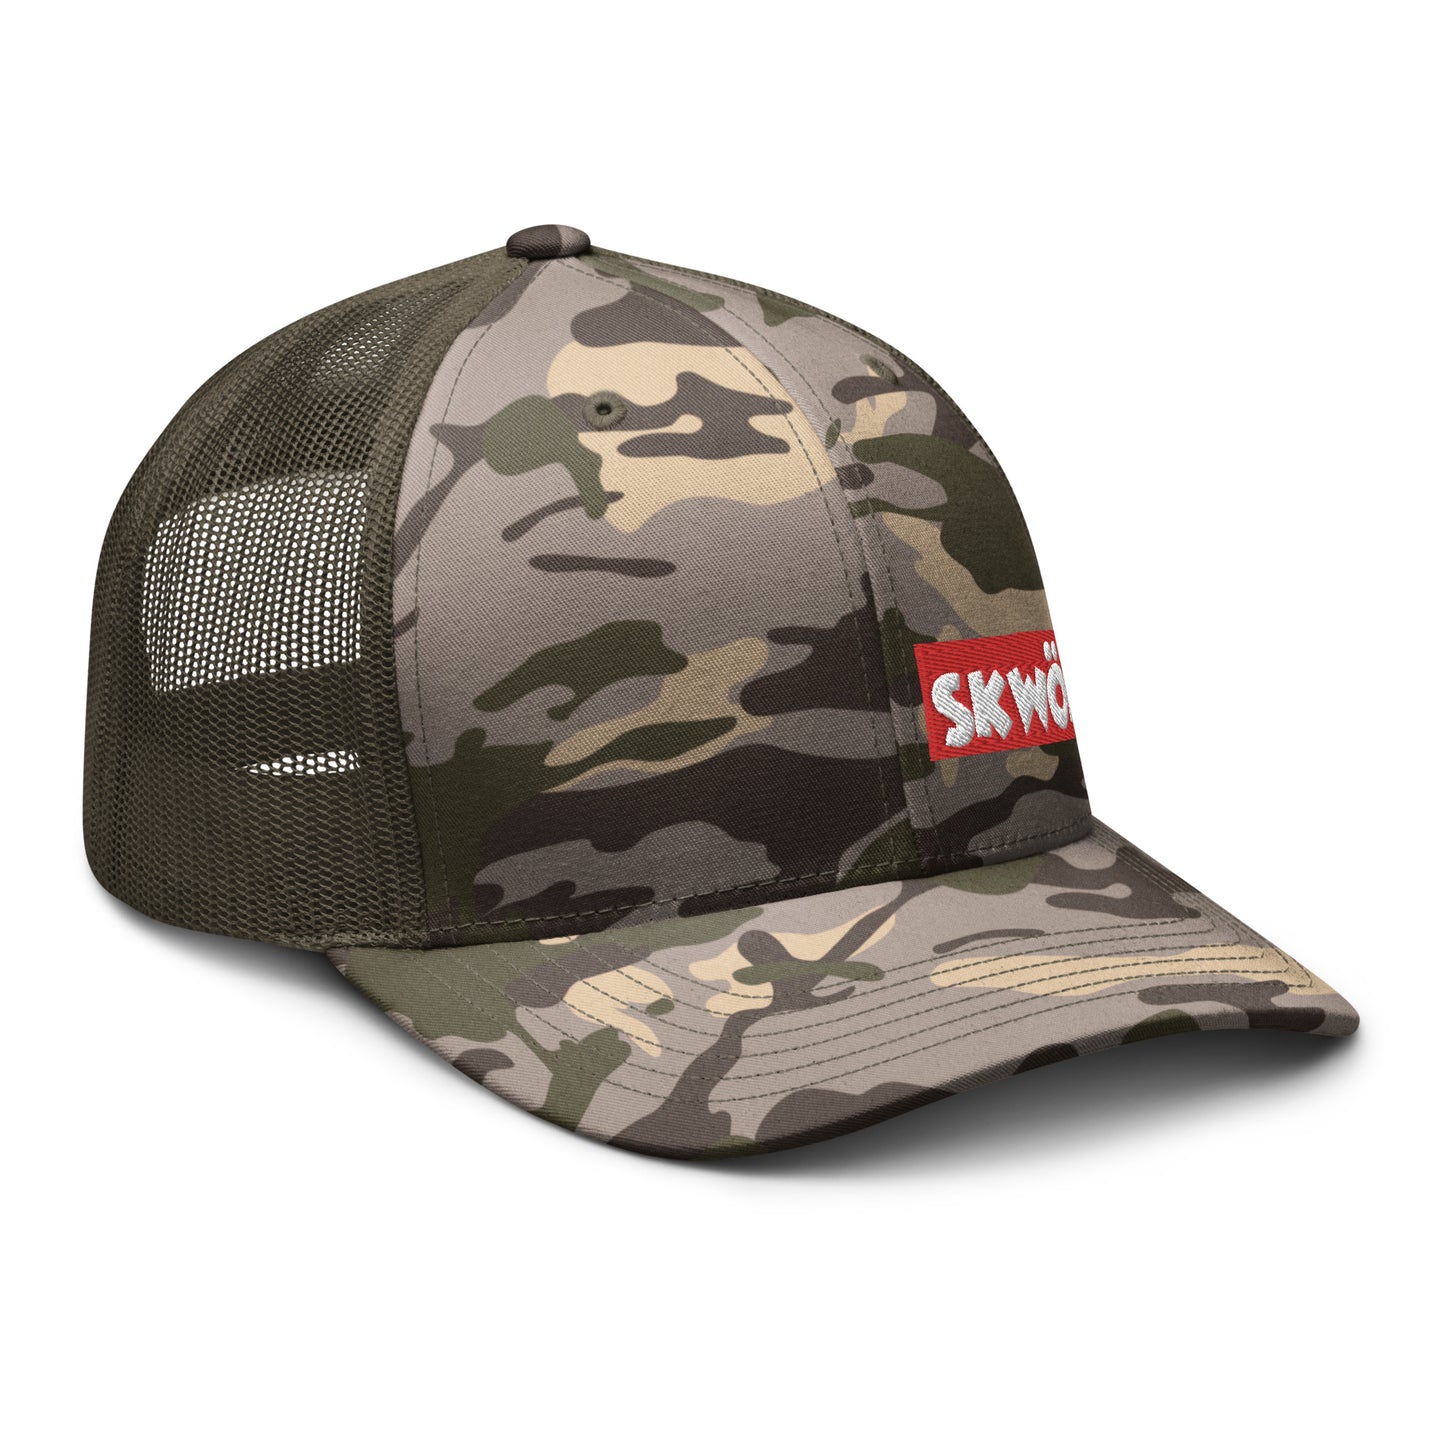 Skwok Brand / Hat / Traditional / OG Logo / Red Box Logo / Camouflage